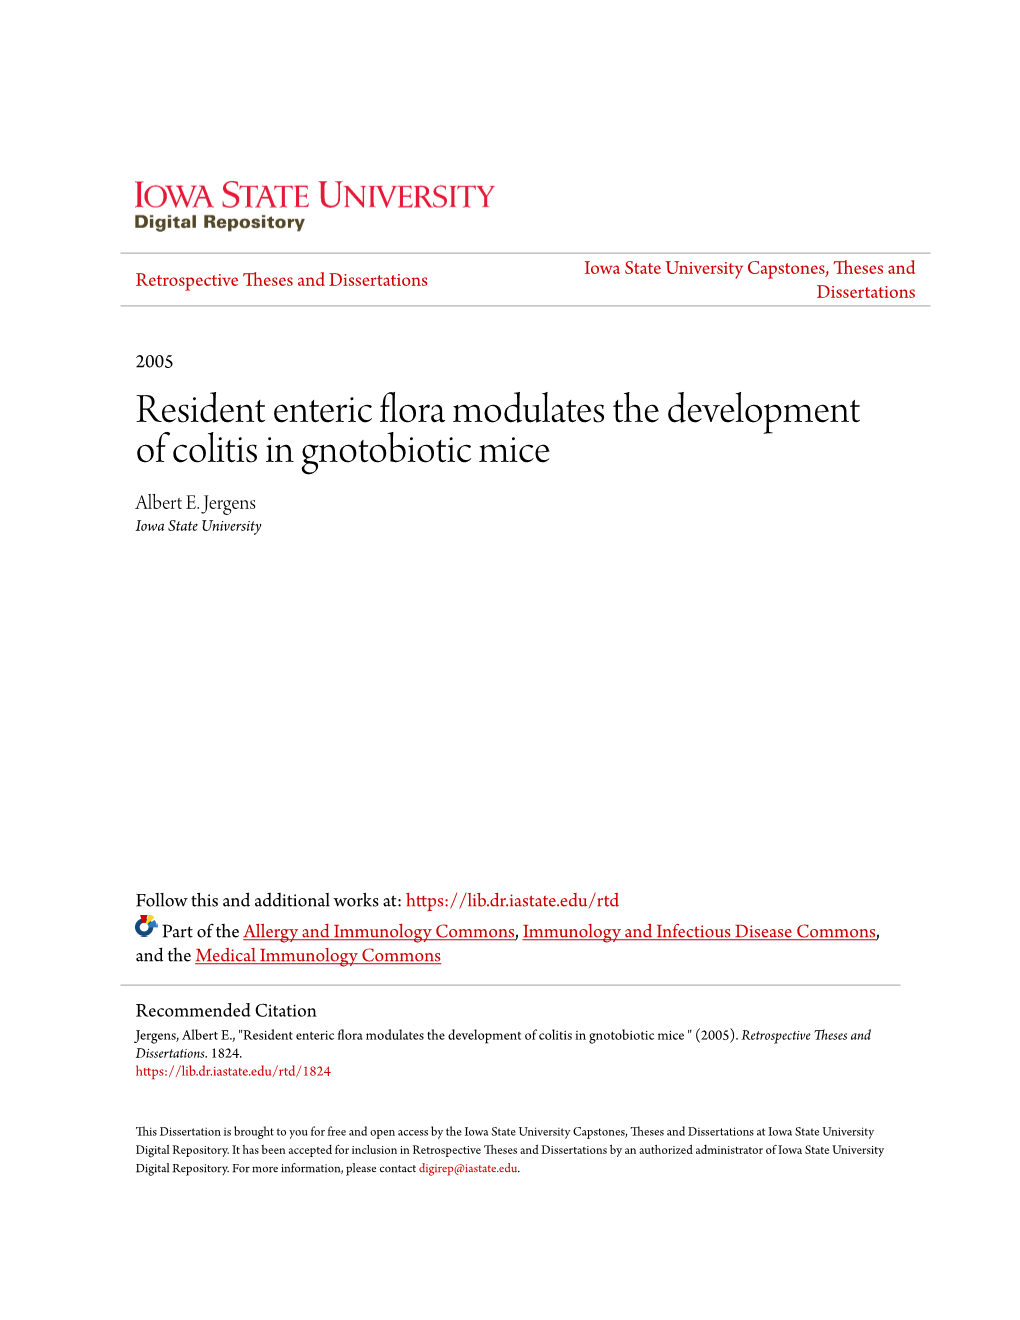 Resident Enteric Flora Modulates the Development of Colitis in Gnotobiotic Mice Albert E